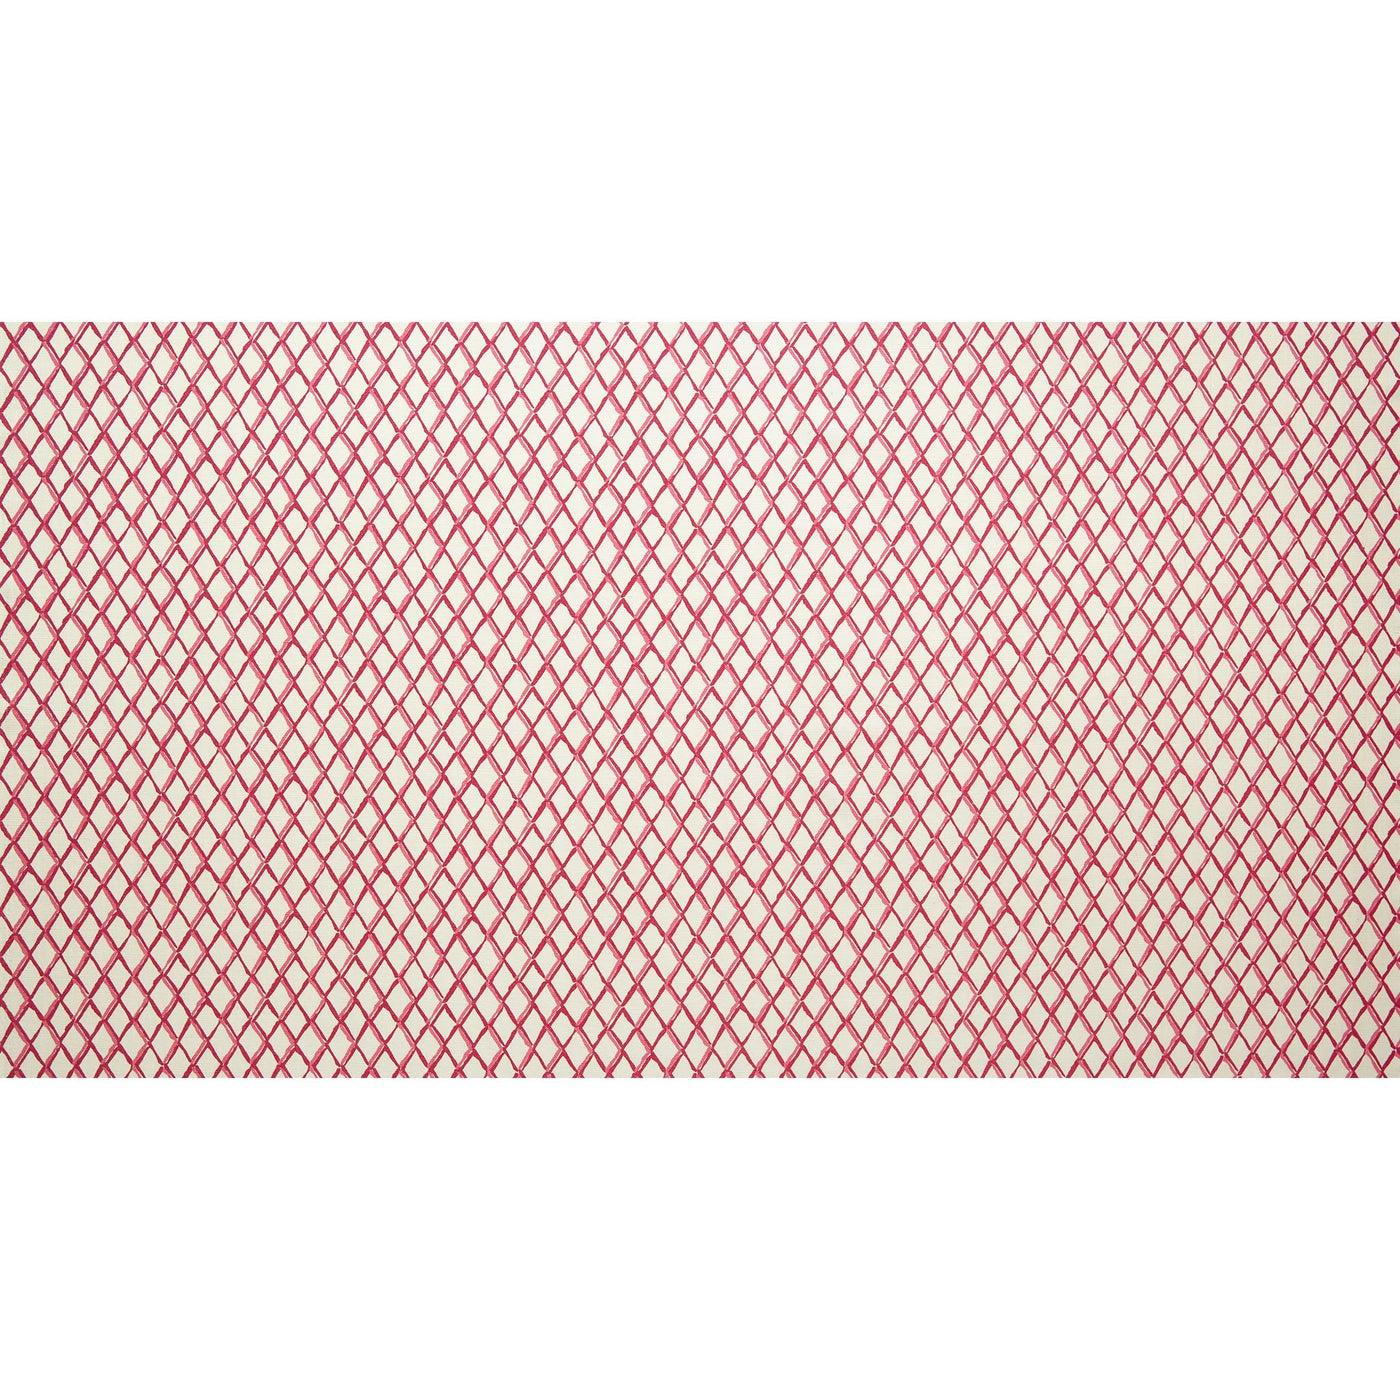 Lexington Fabric in Raspberry